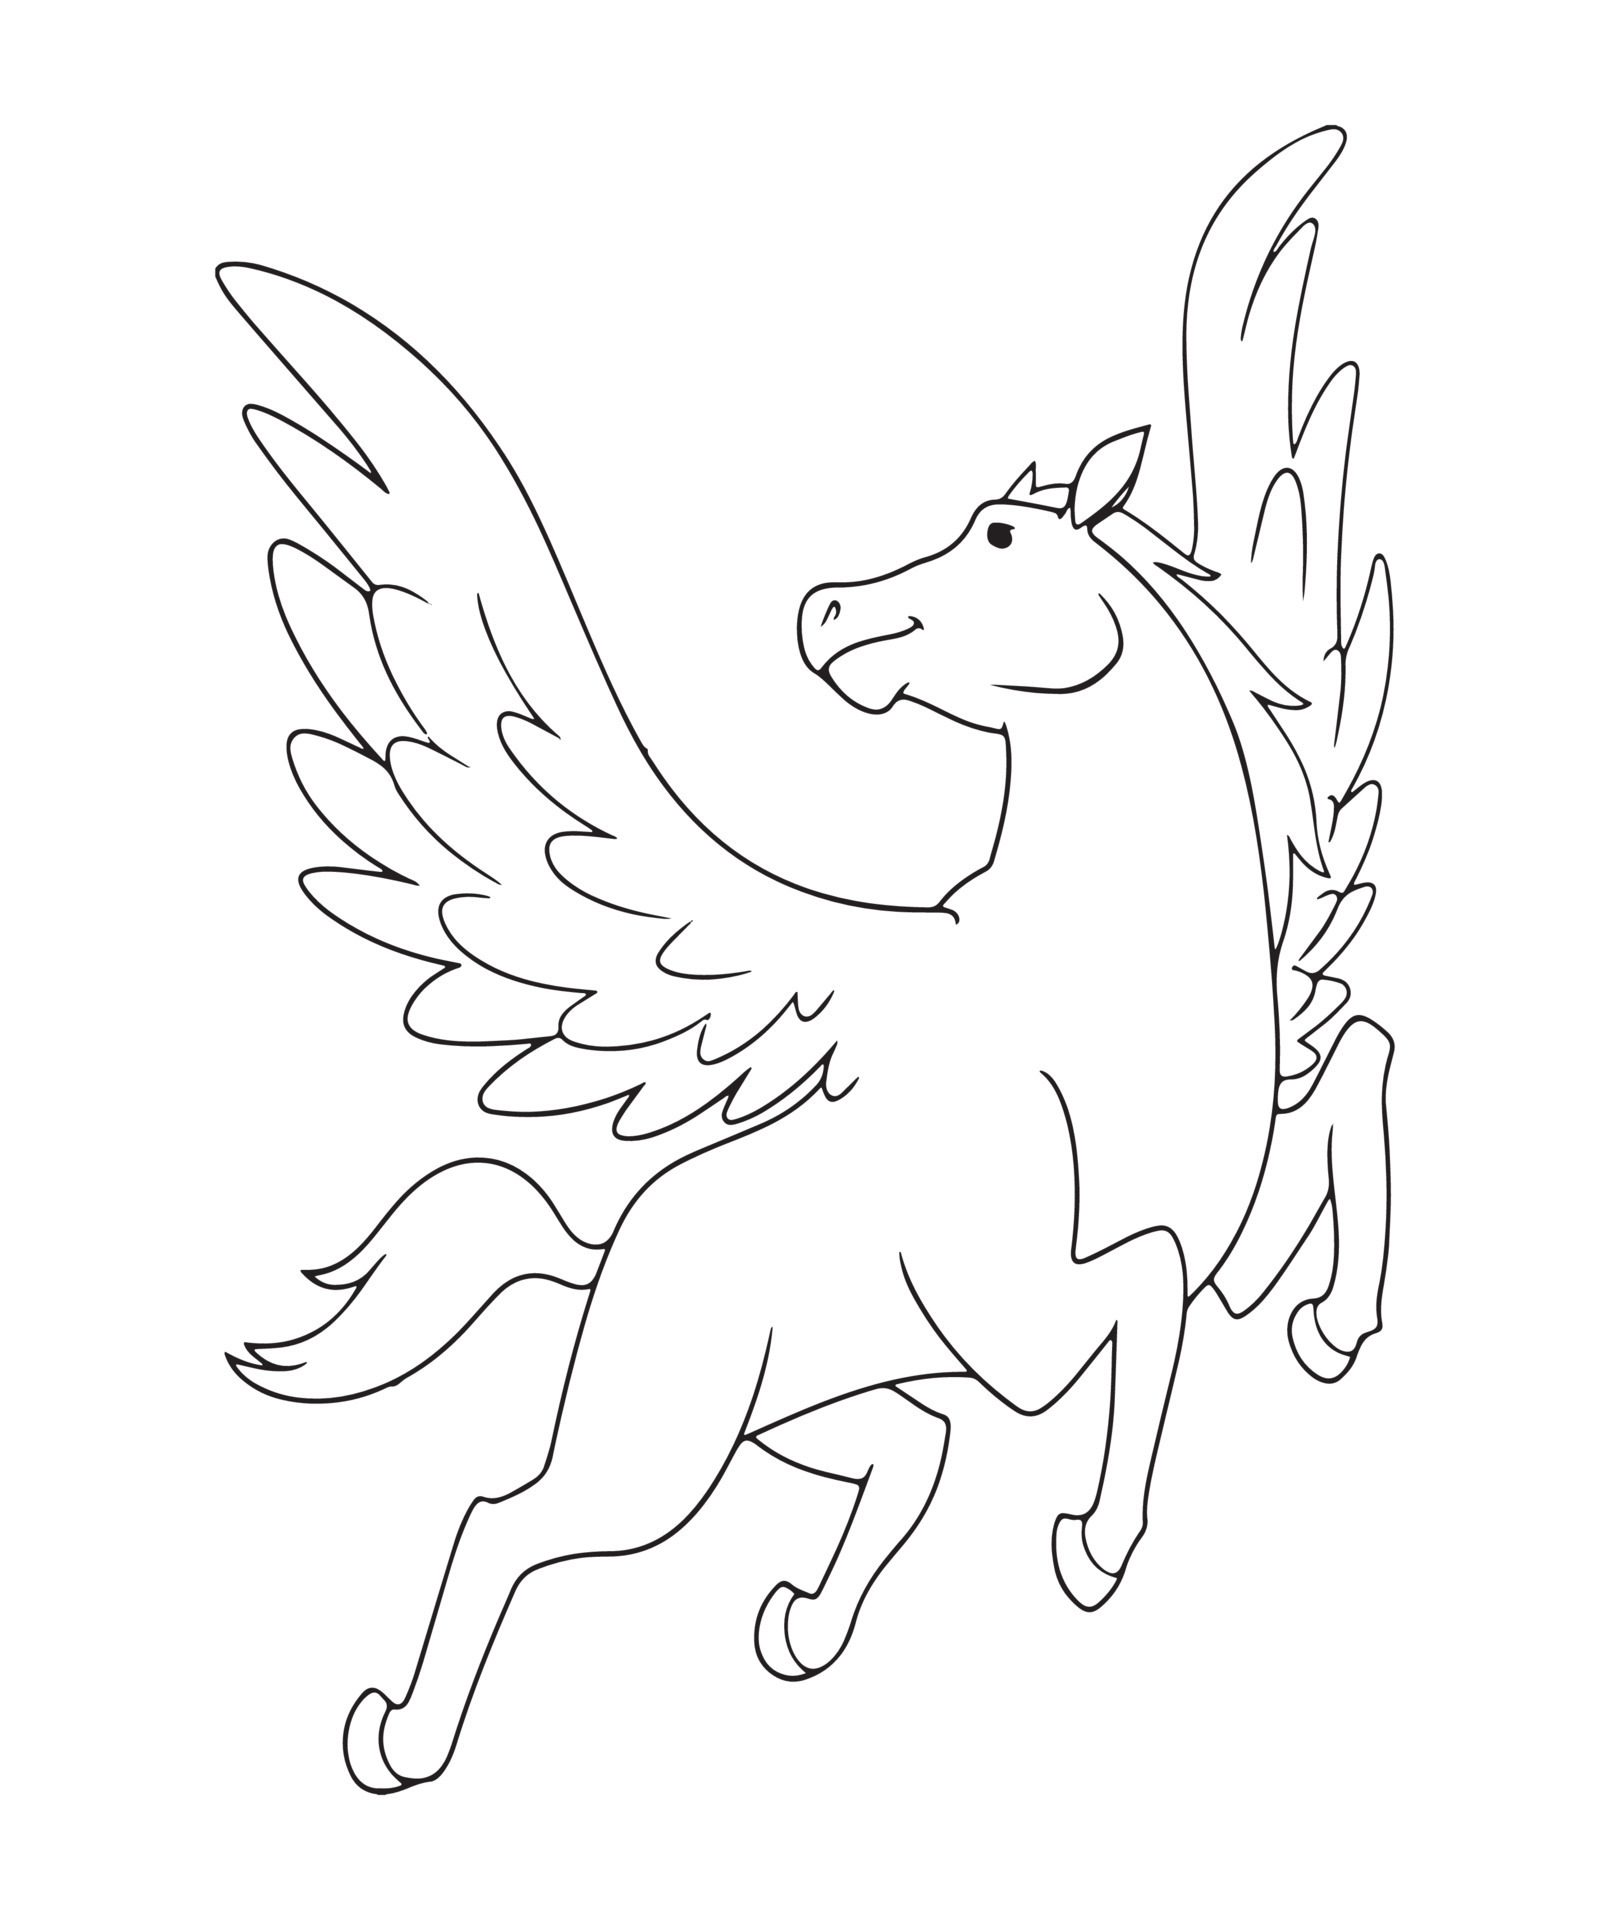 Flying pegasus stock illustration. Illustration of background - 218977646